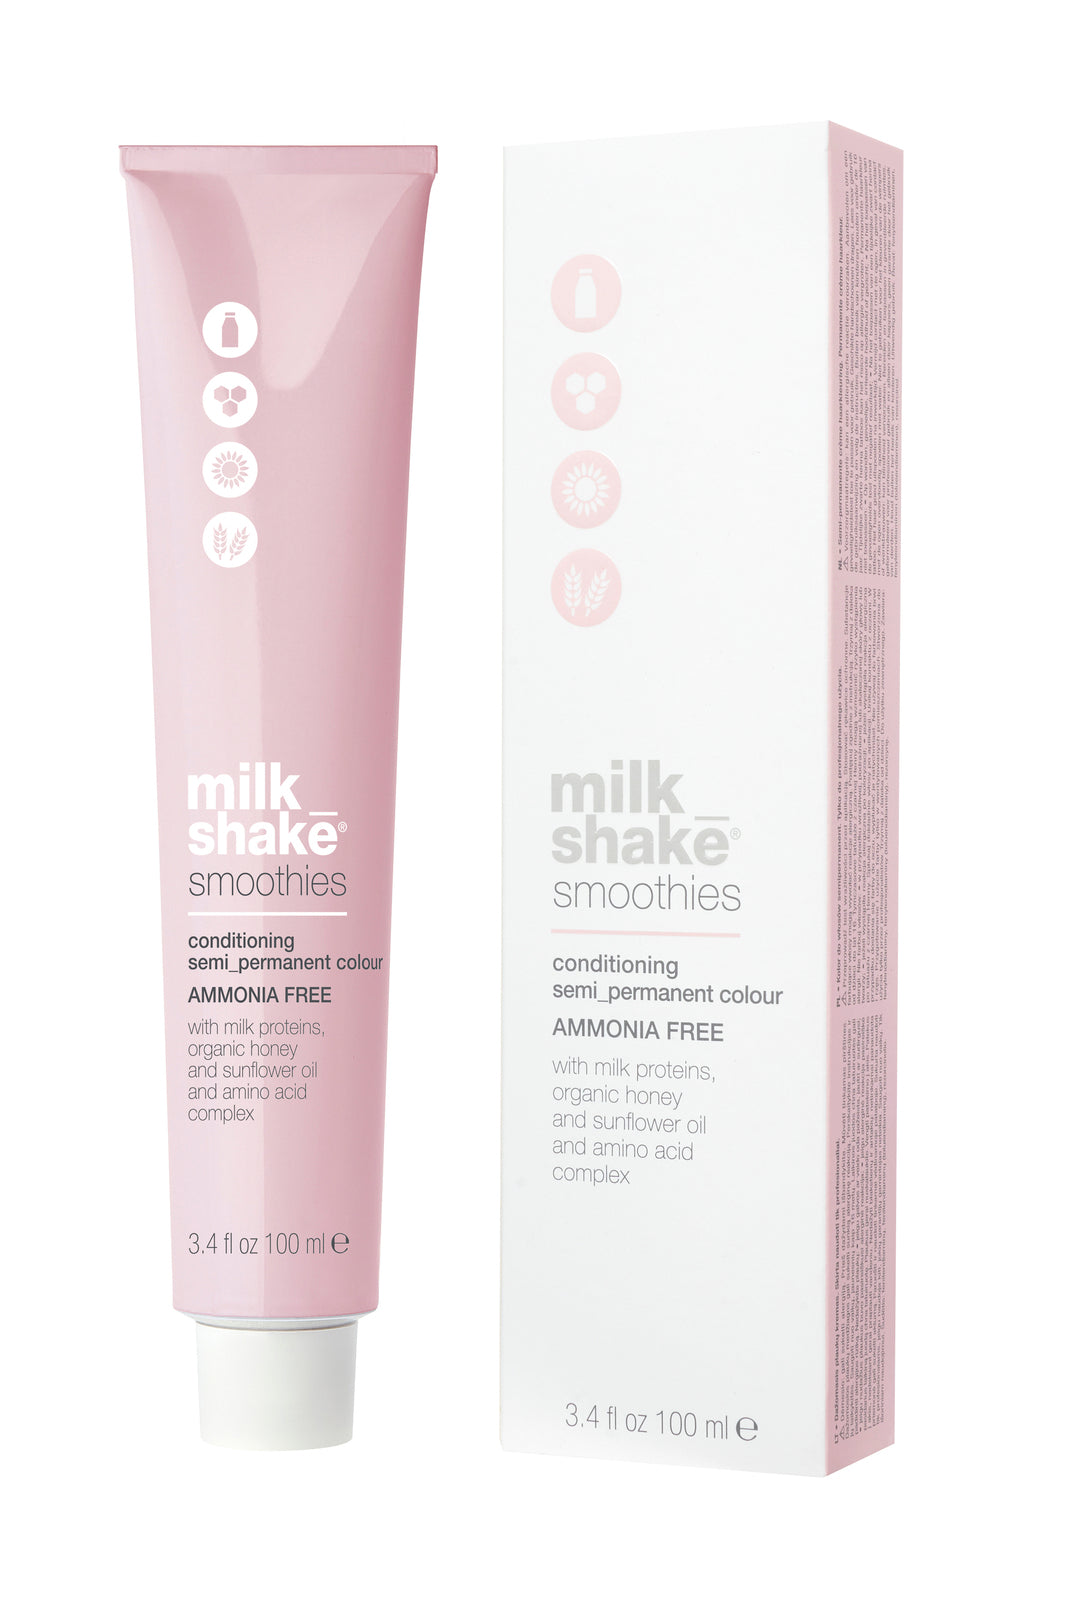 Milkshake smoothies semi-permanent color 7.43